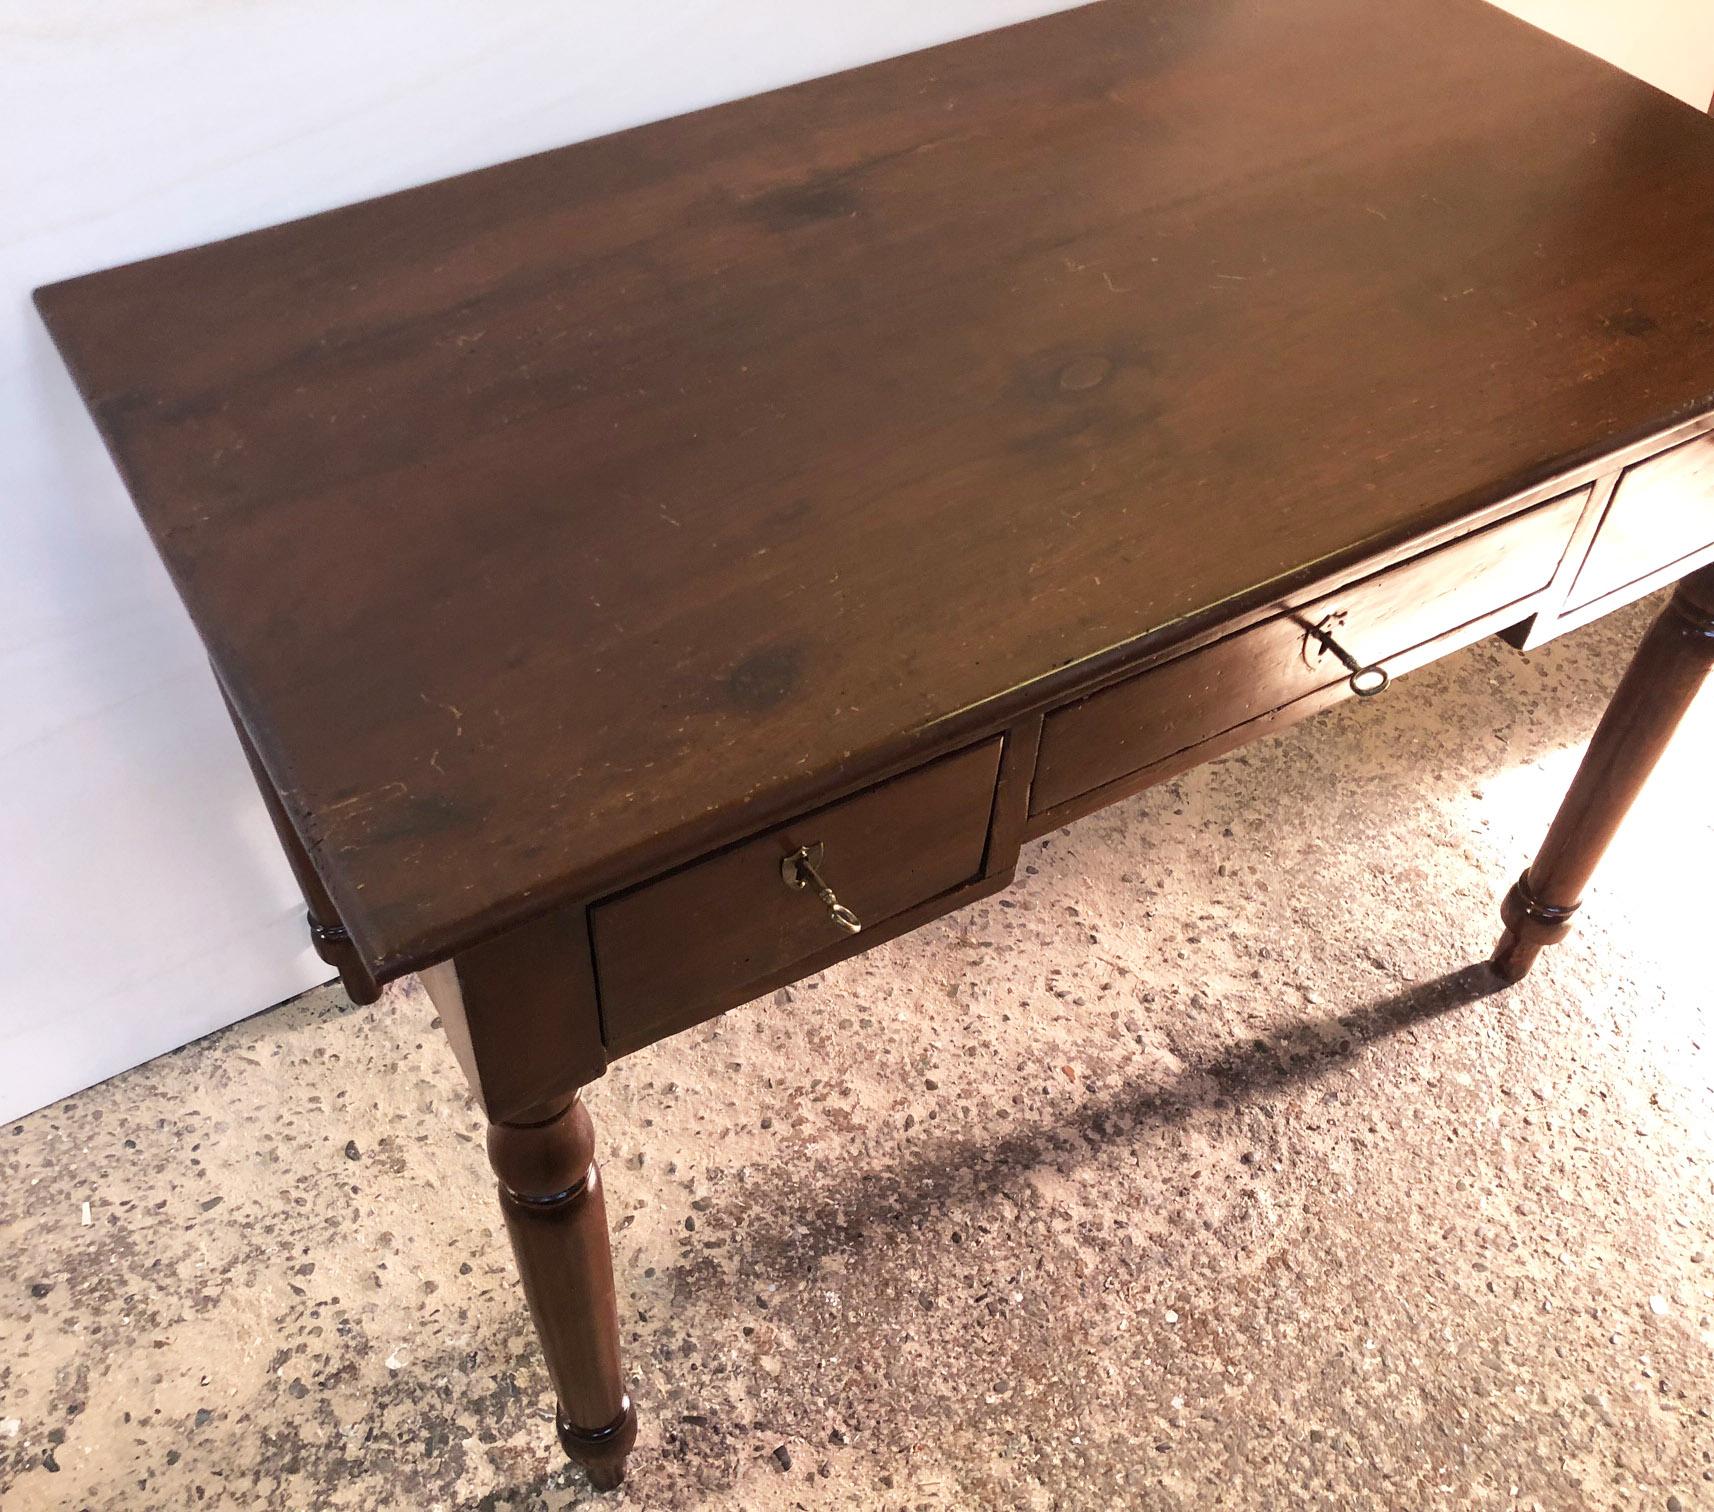 Rustic Original Italian Desk in Walnut and Fir, with Three Drawers, Turned Leg